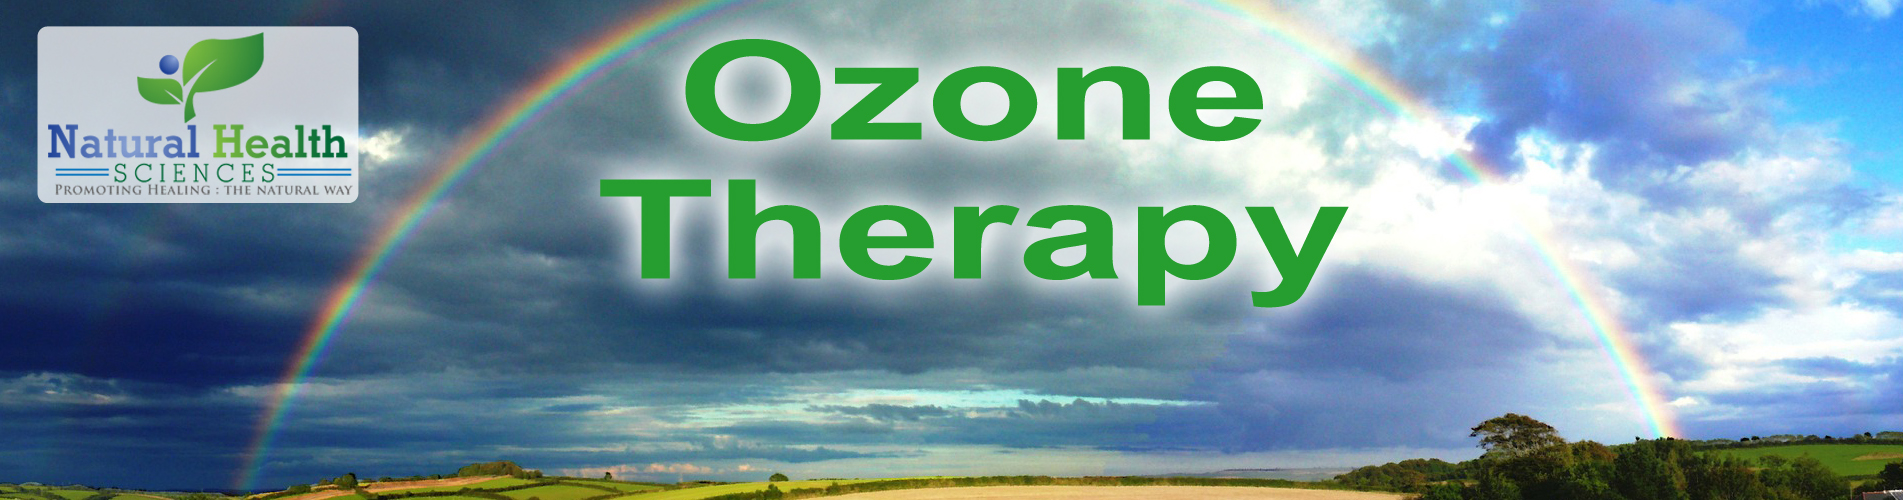 natural-health-sciences-arizona-ozone-therapy